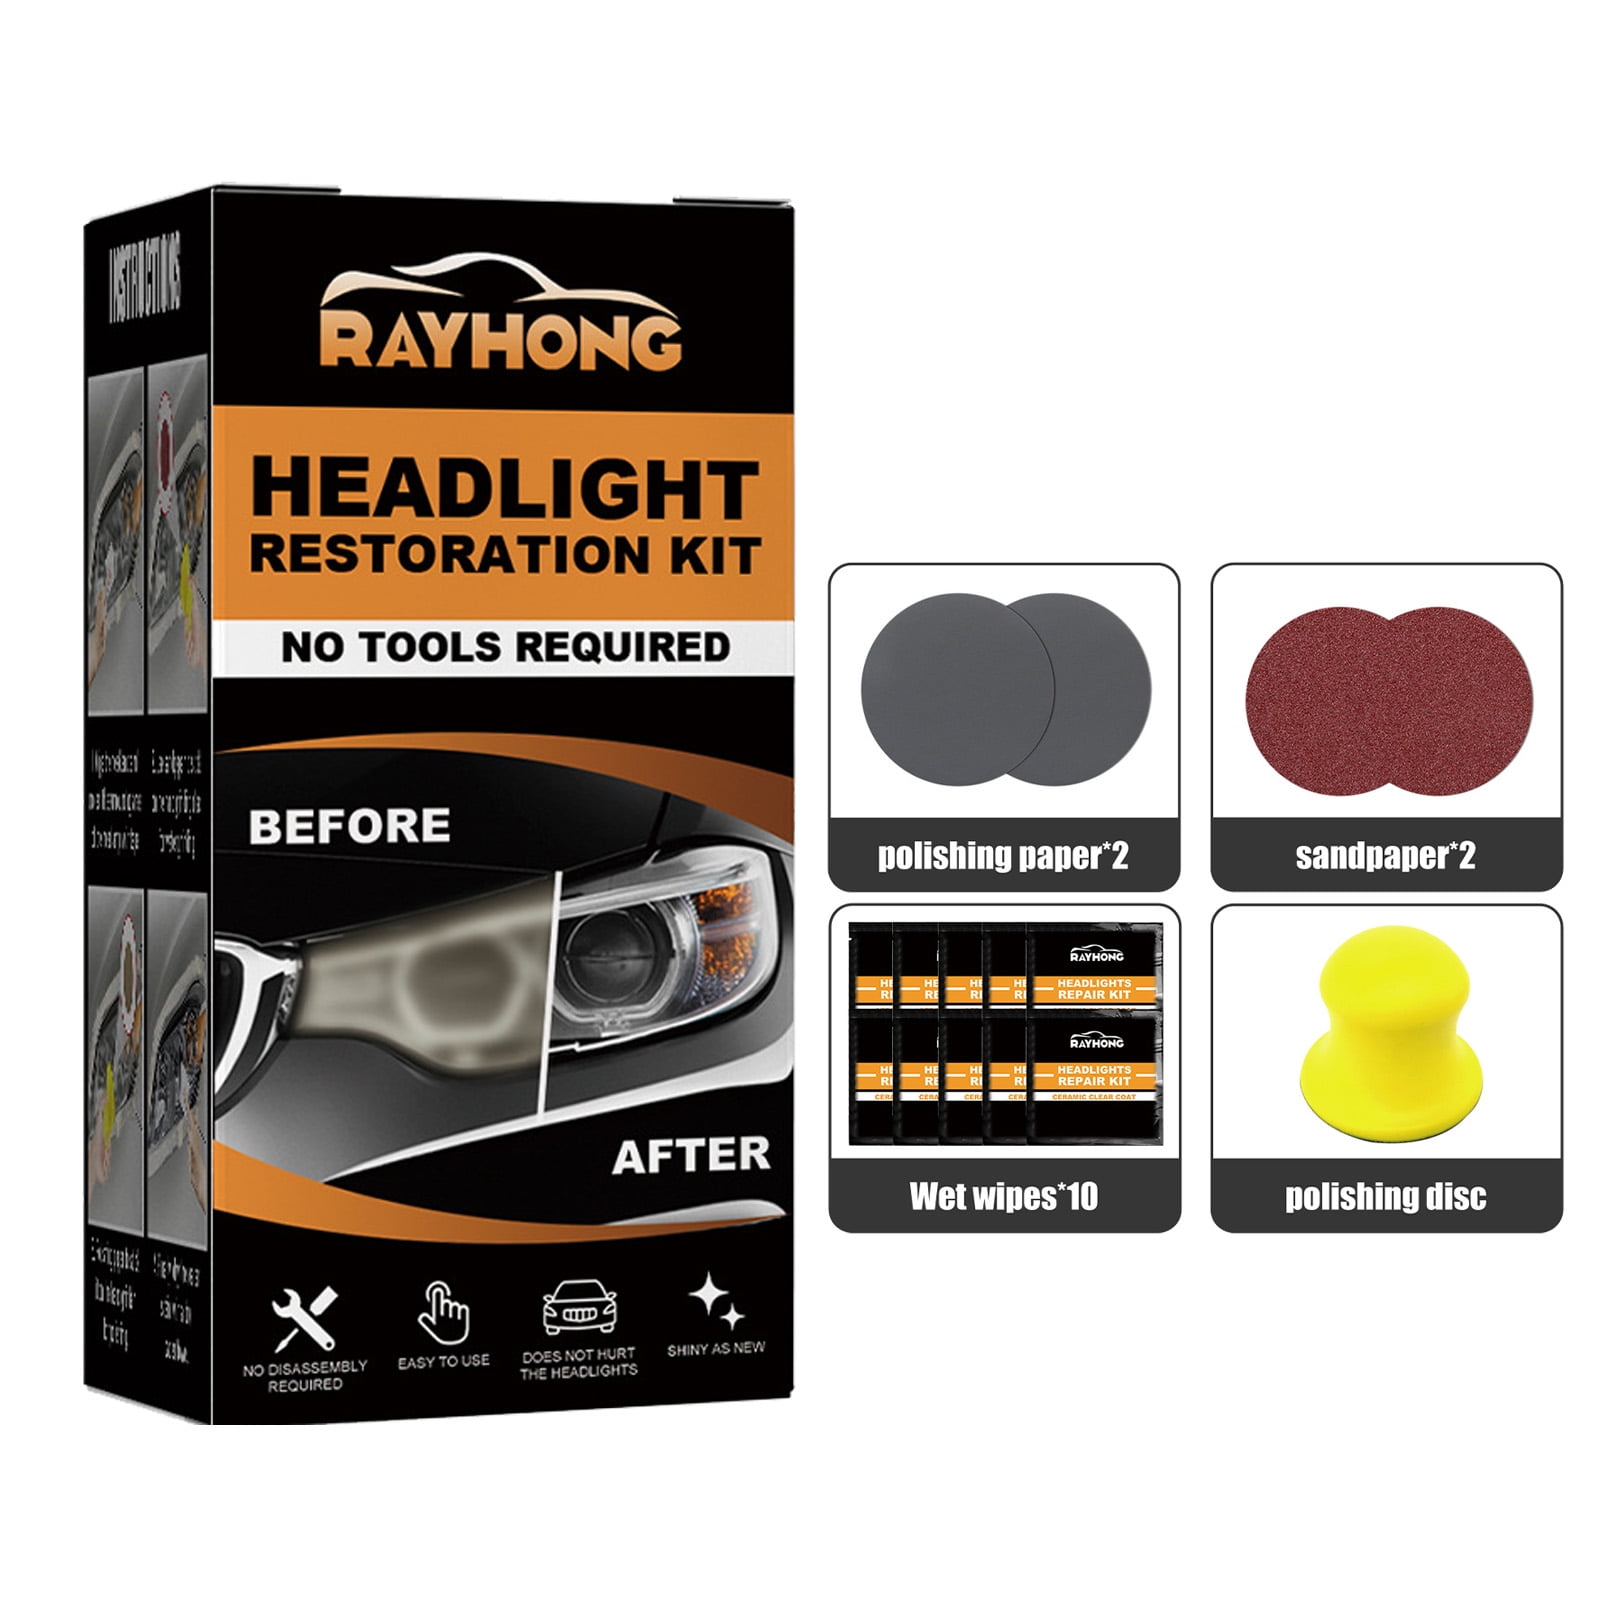 SYLVANIA Headlight Restoration Kit